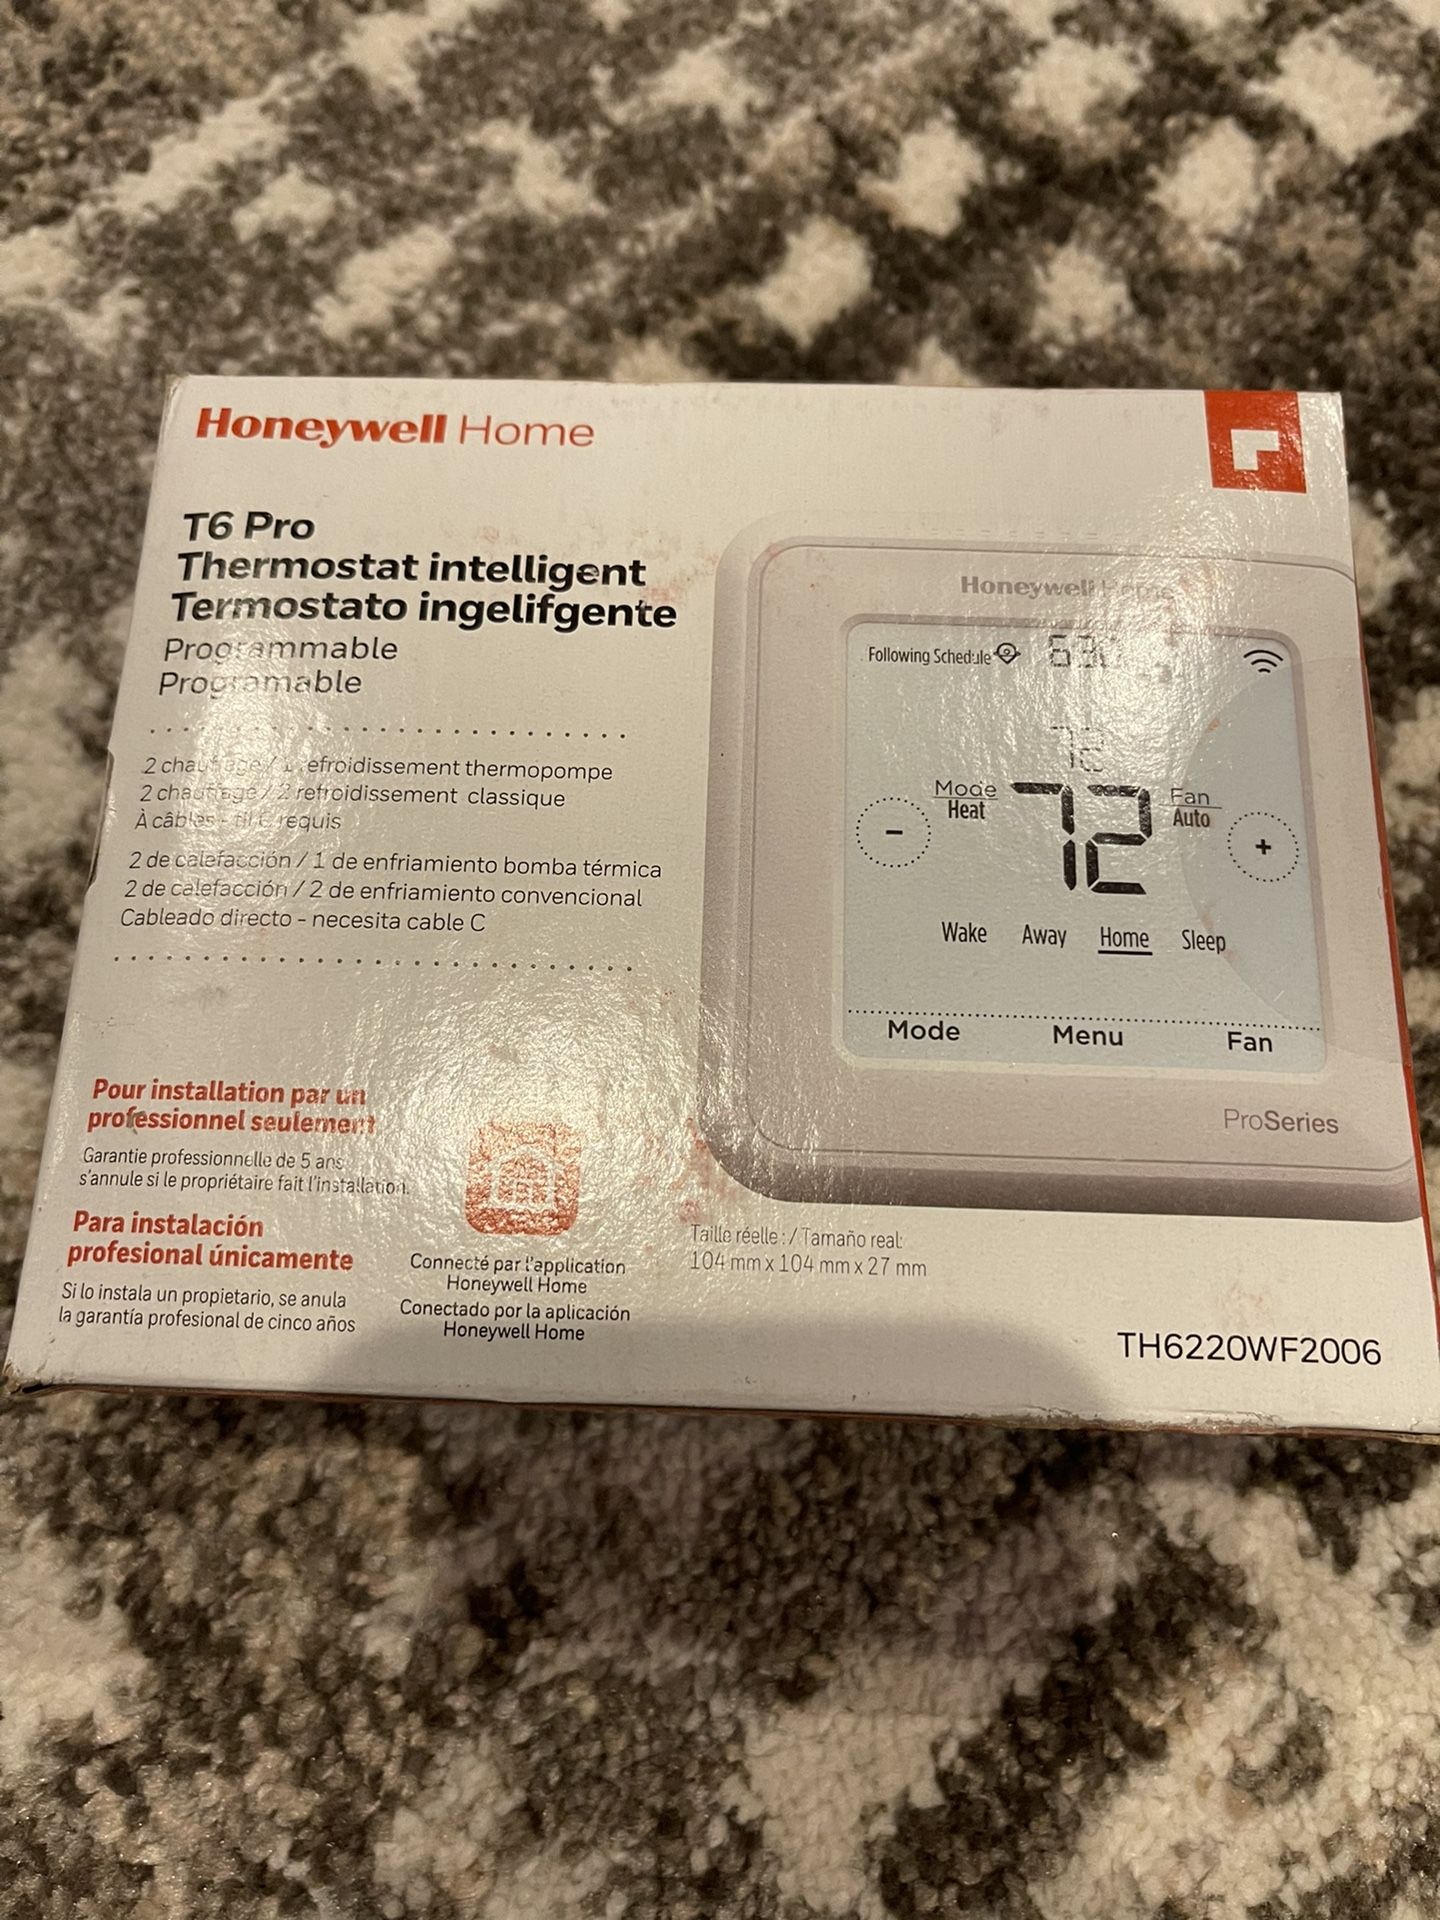 T6 Pro Honeywell Wi-Fi Thermostat